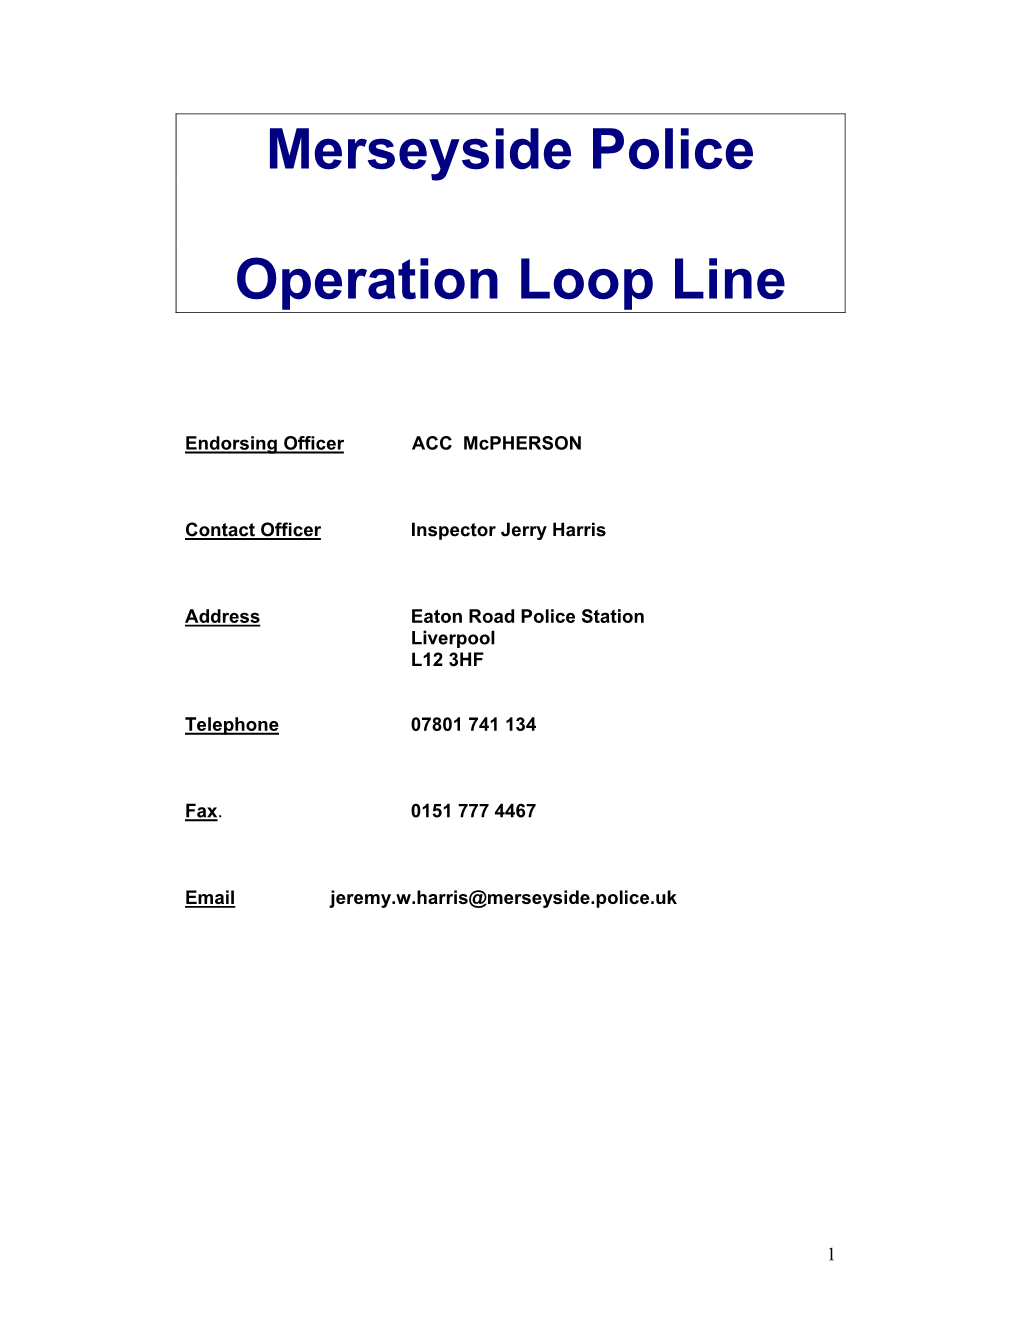 Merseyside Police Operation Loop Line Summary